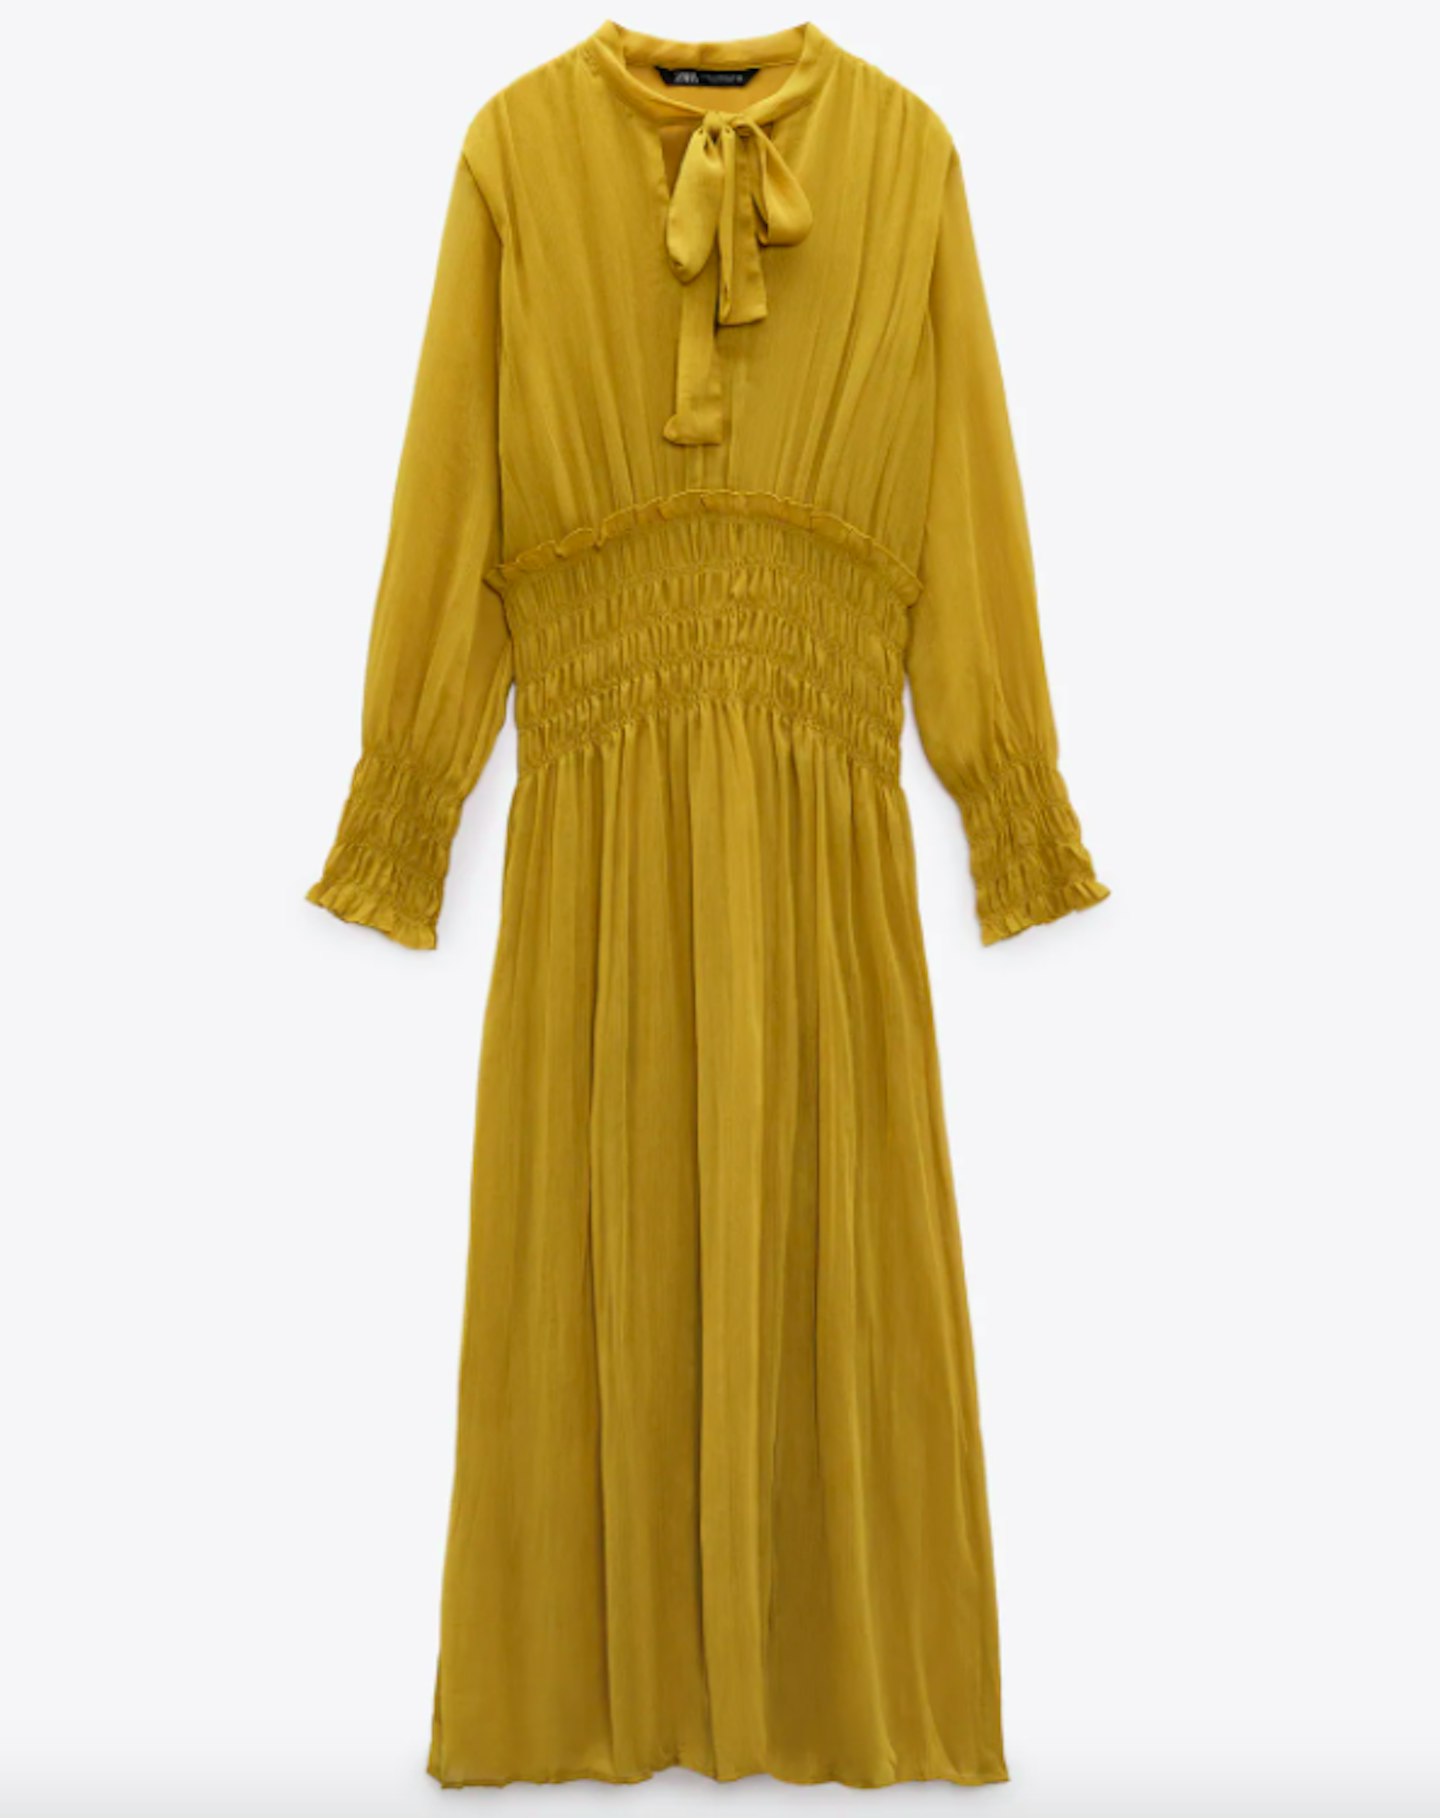 Zara, Dress With Bow And Elastic Waist, £49.99